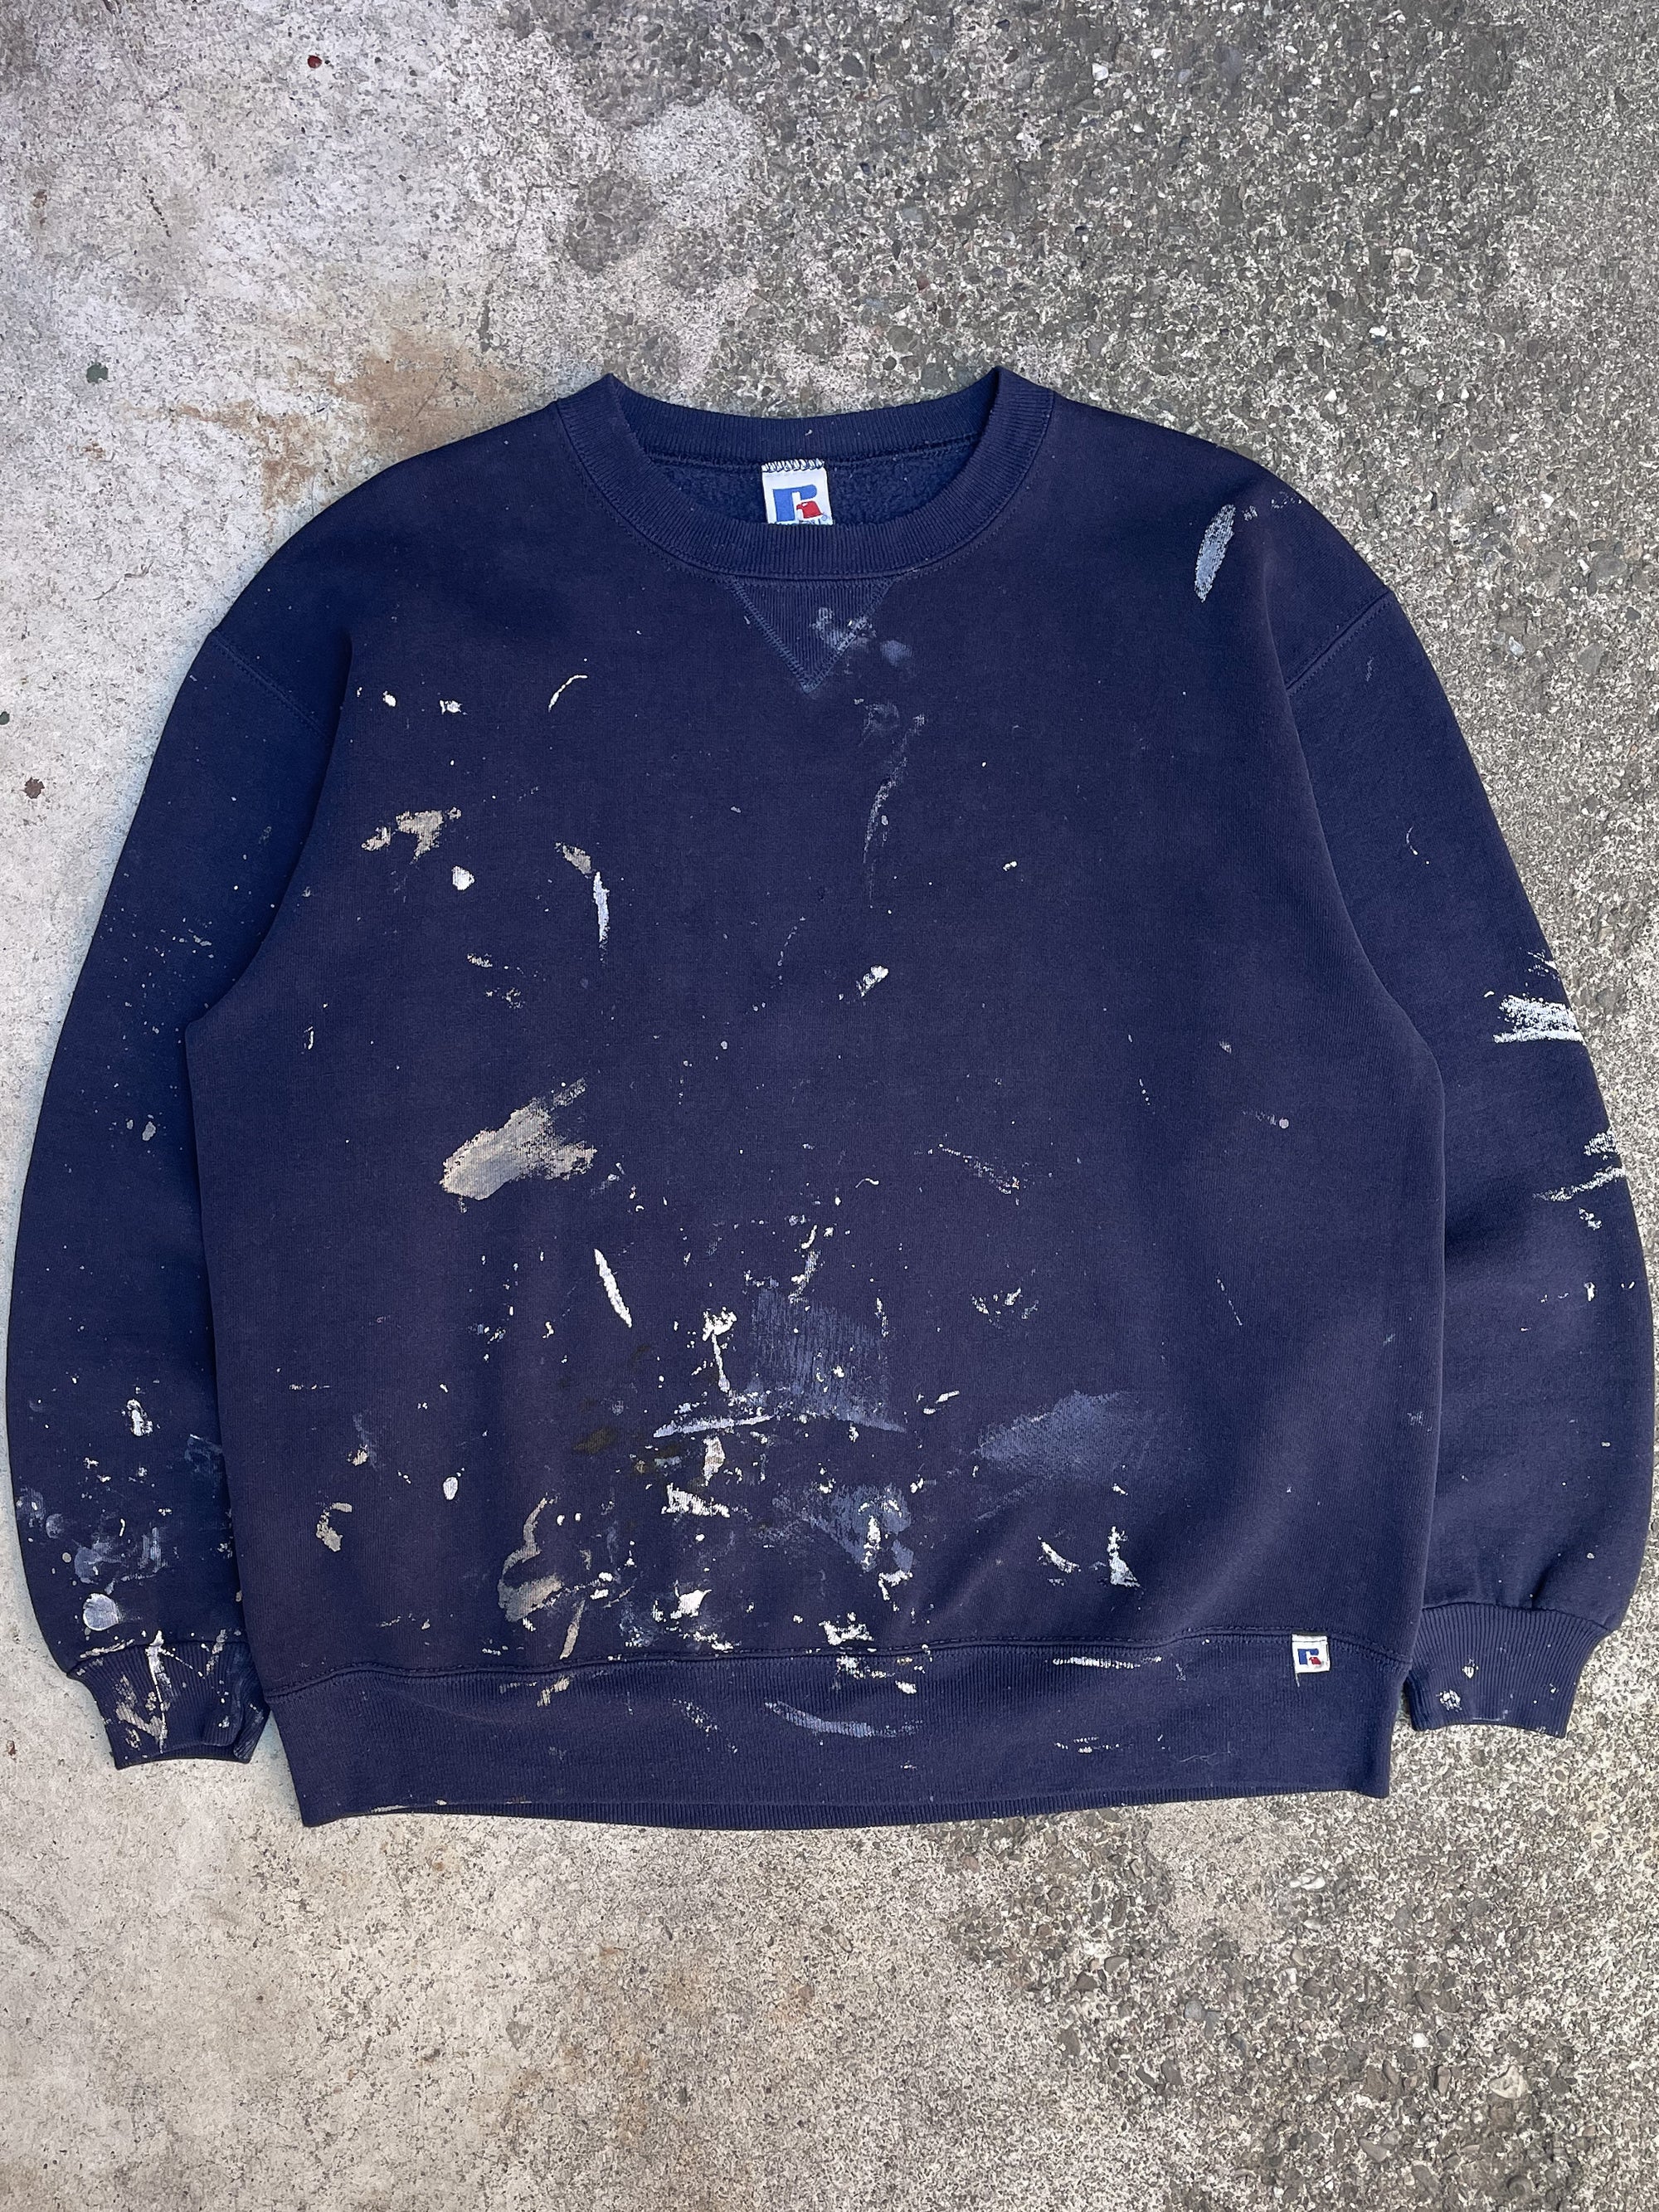 1990s Russell Painted Navy Blank Sweatshirt (L/XL)